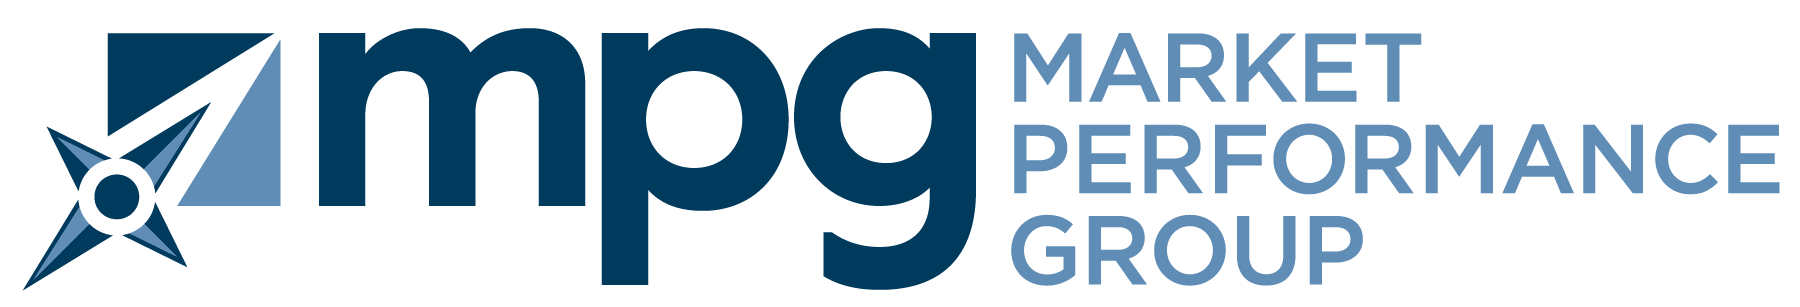 Market Performance Group MPG